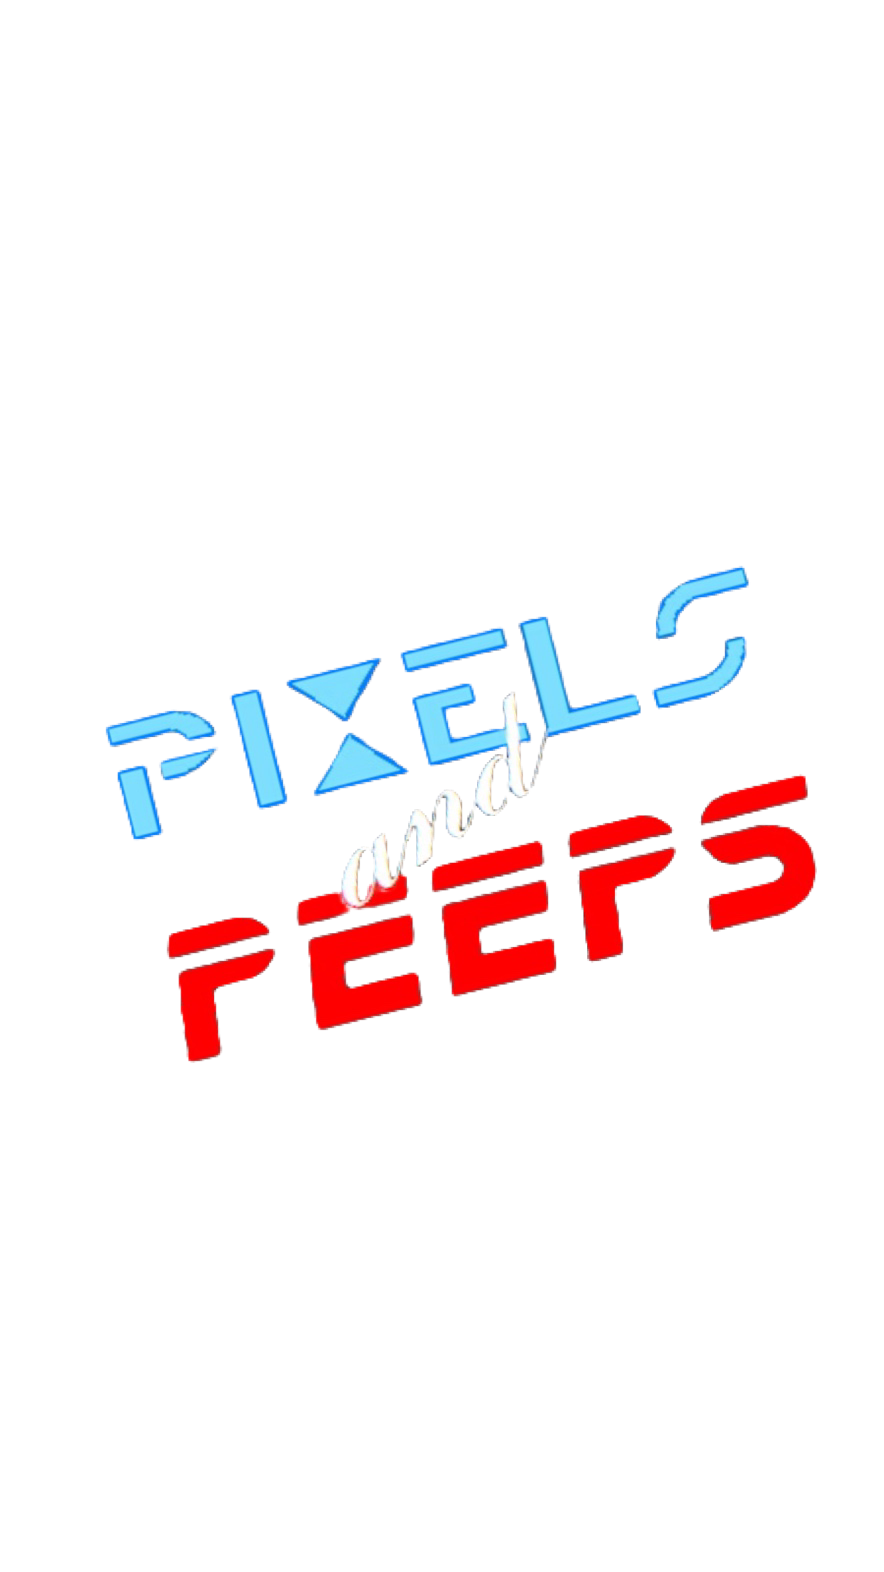 Pixels and Peeps